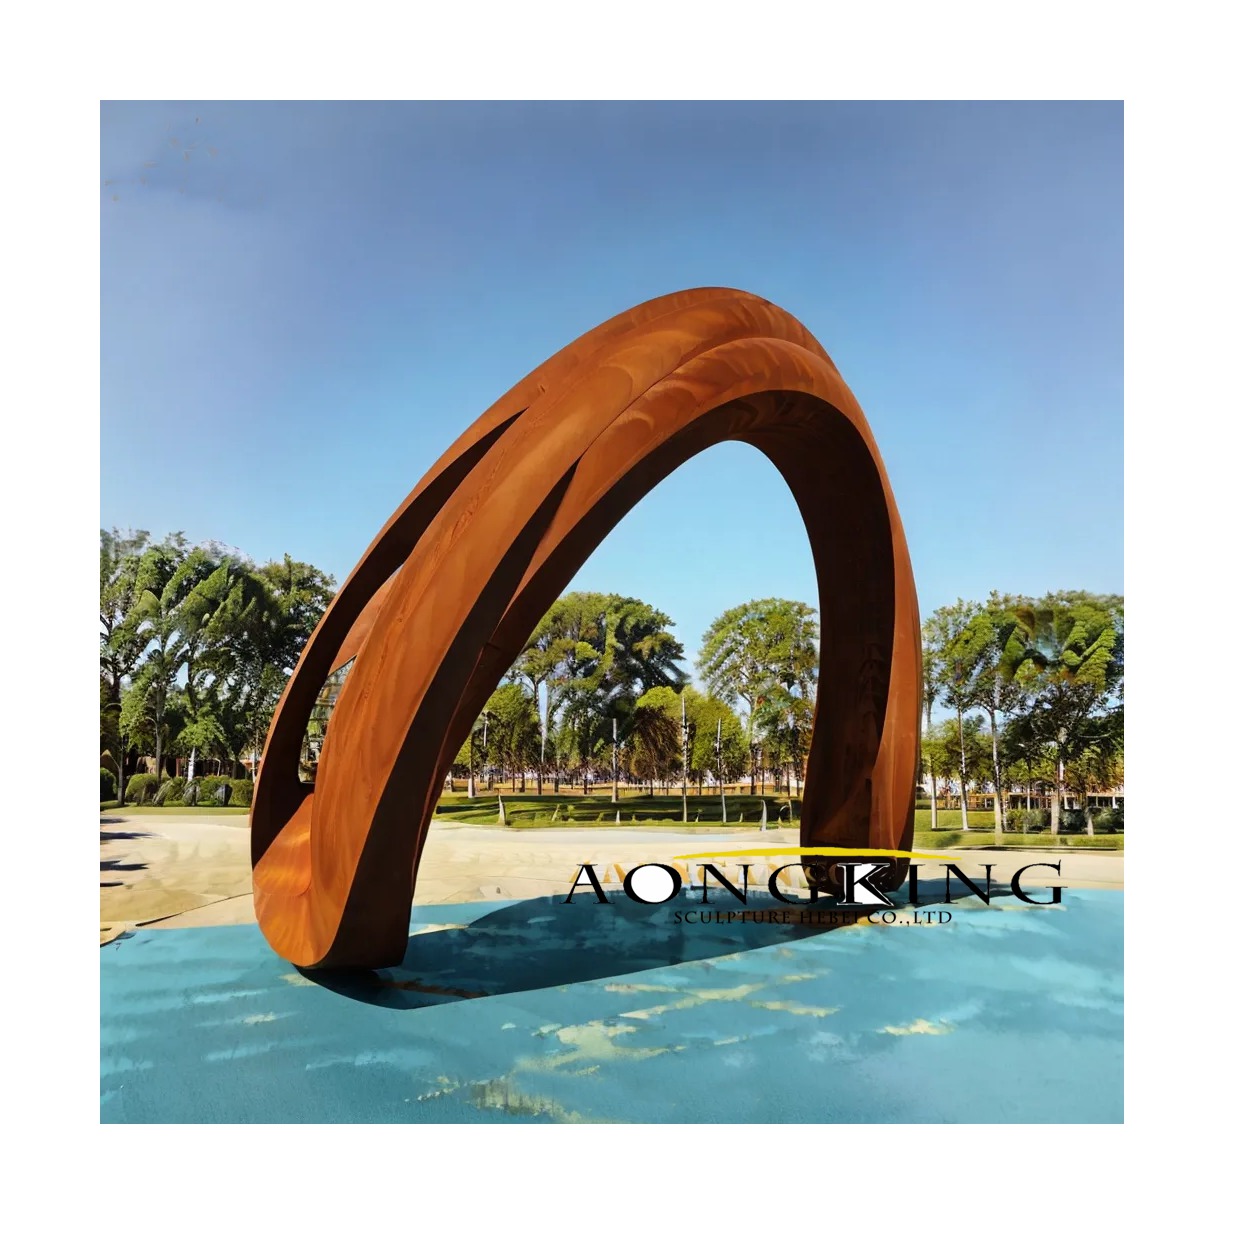 corten steel posts "Sea gate" sculpture